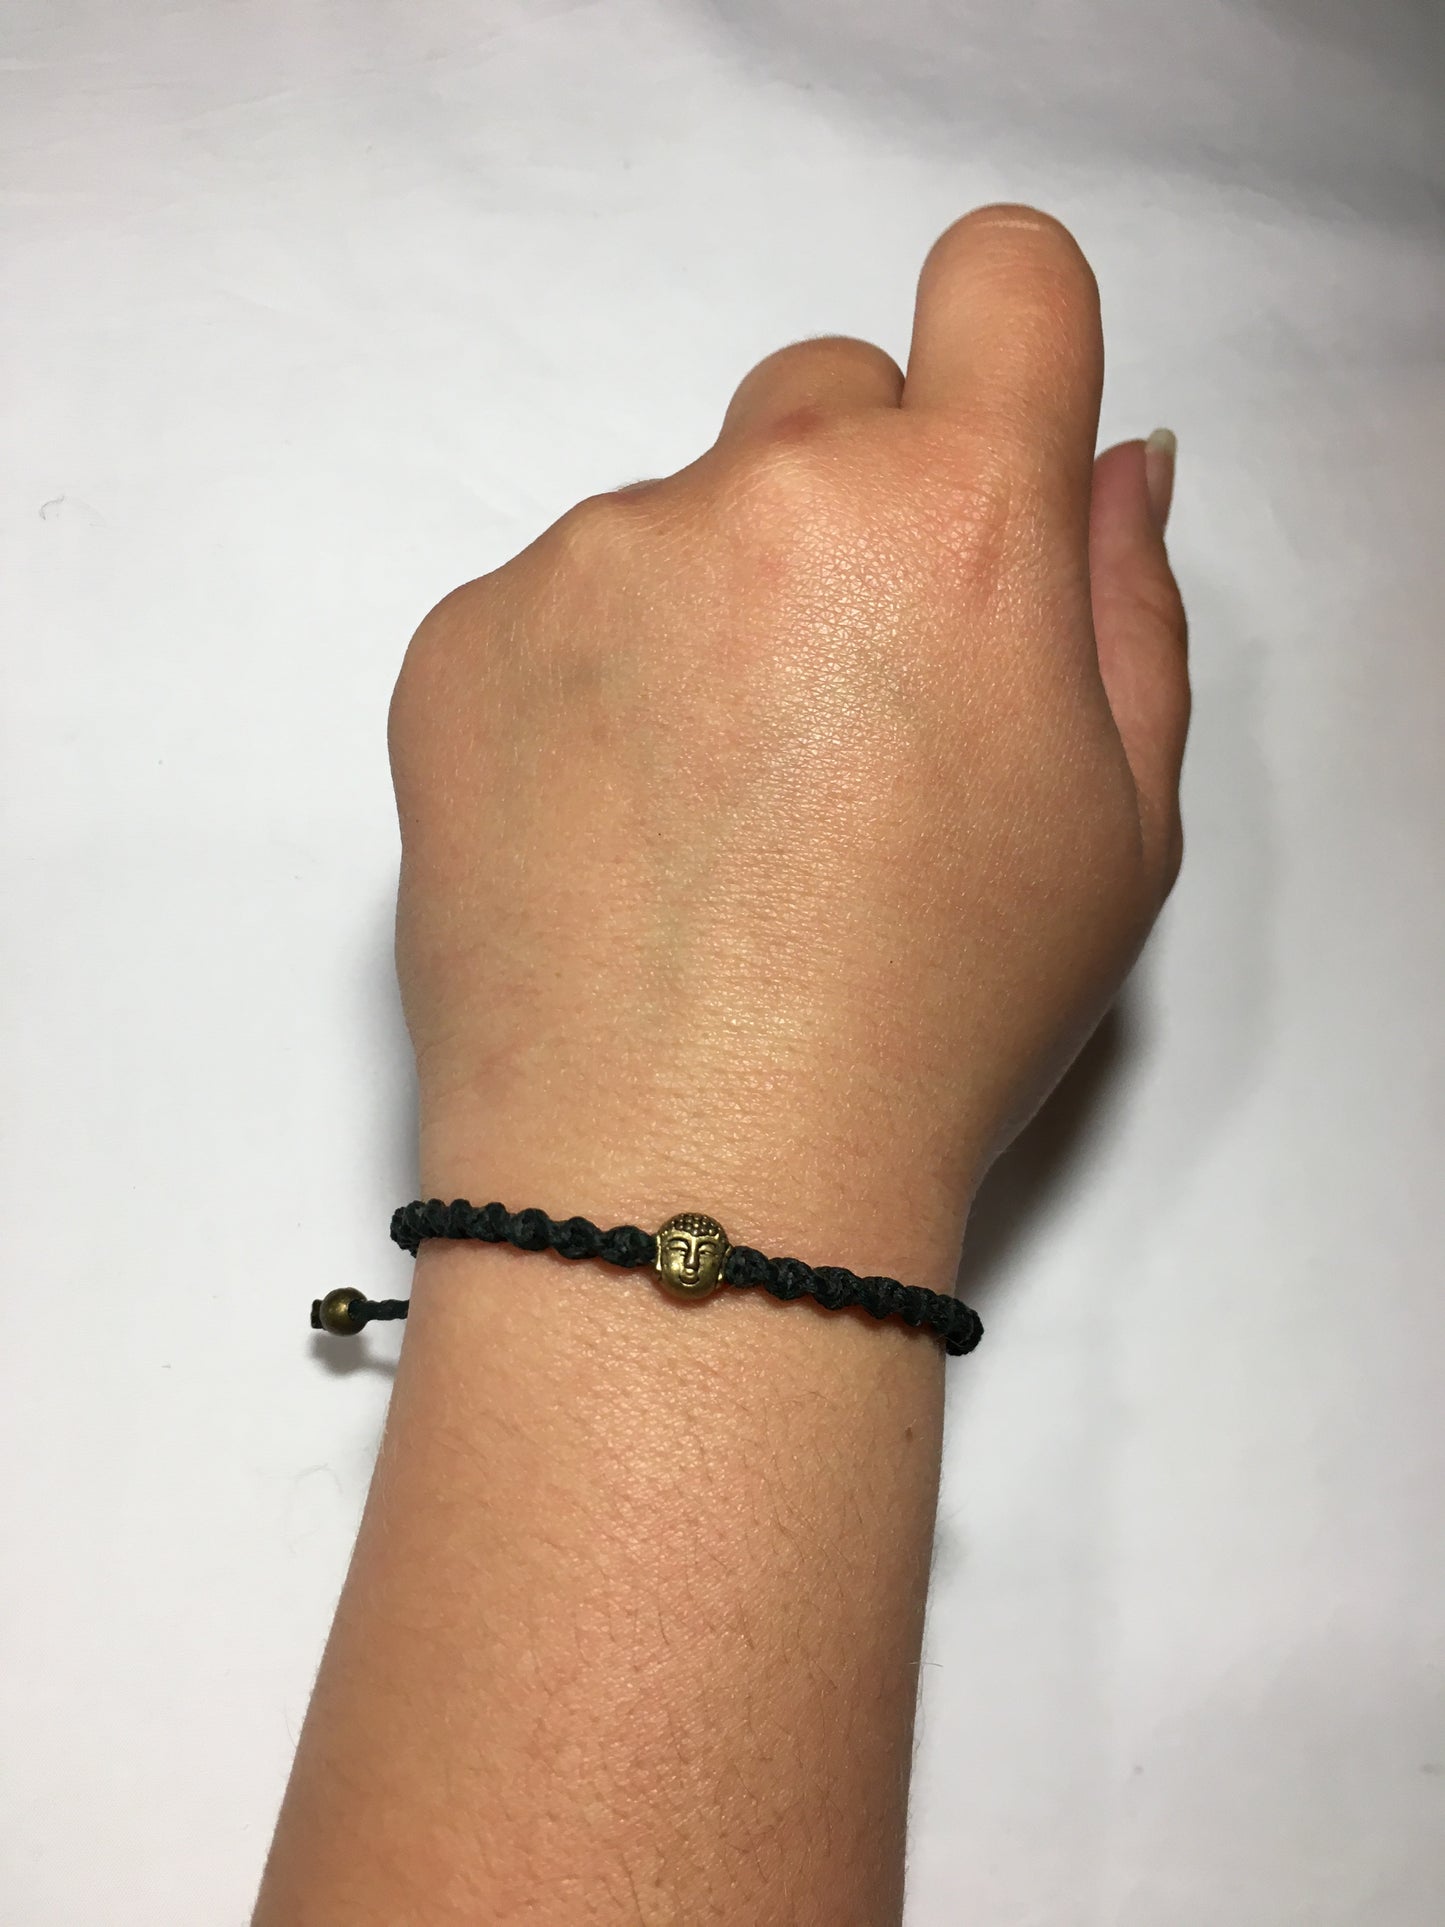 Roped Bracelet - Buddha pendant with wax cord bracelet